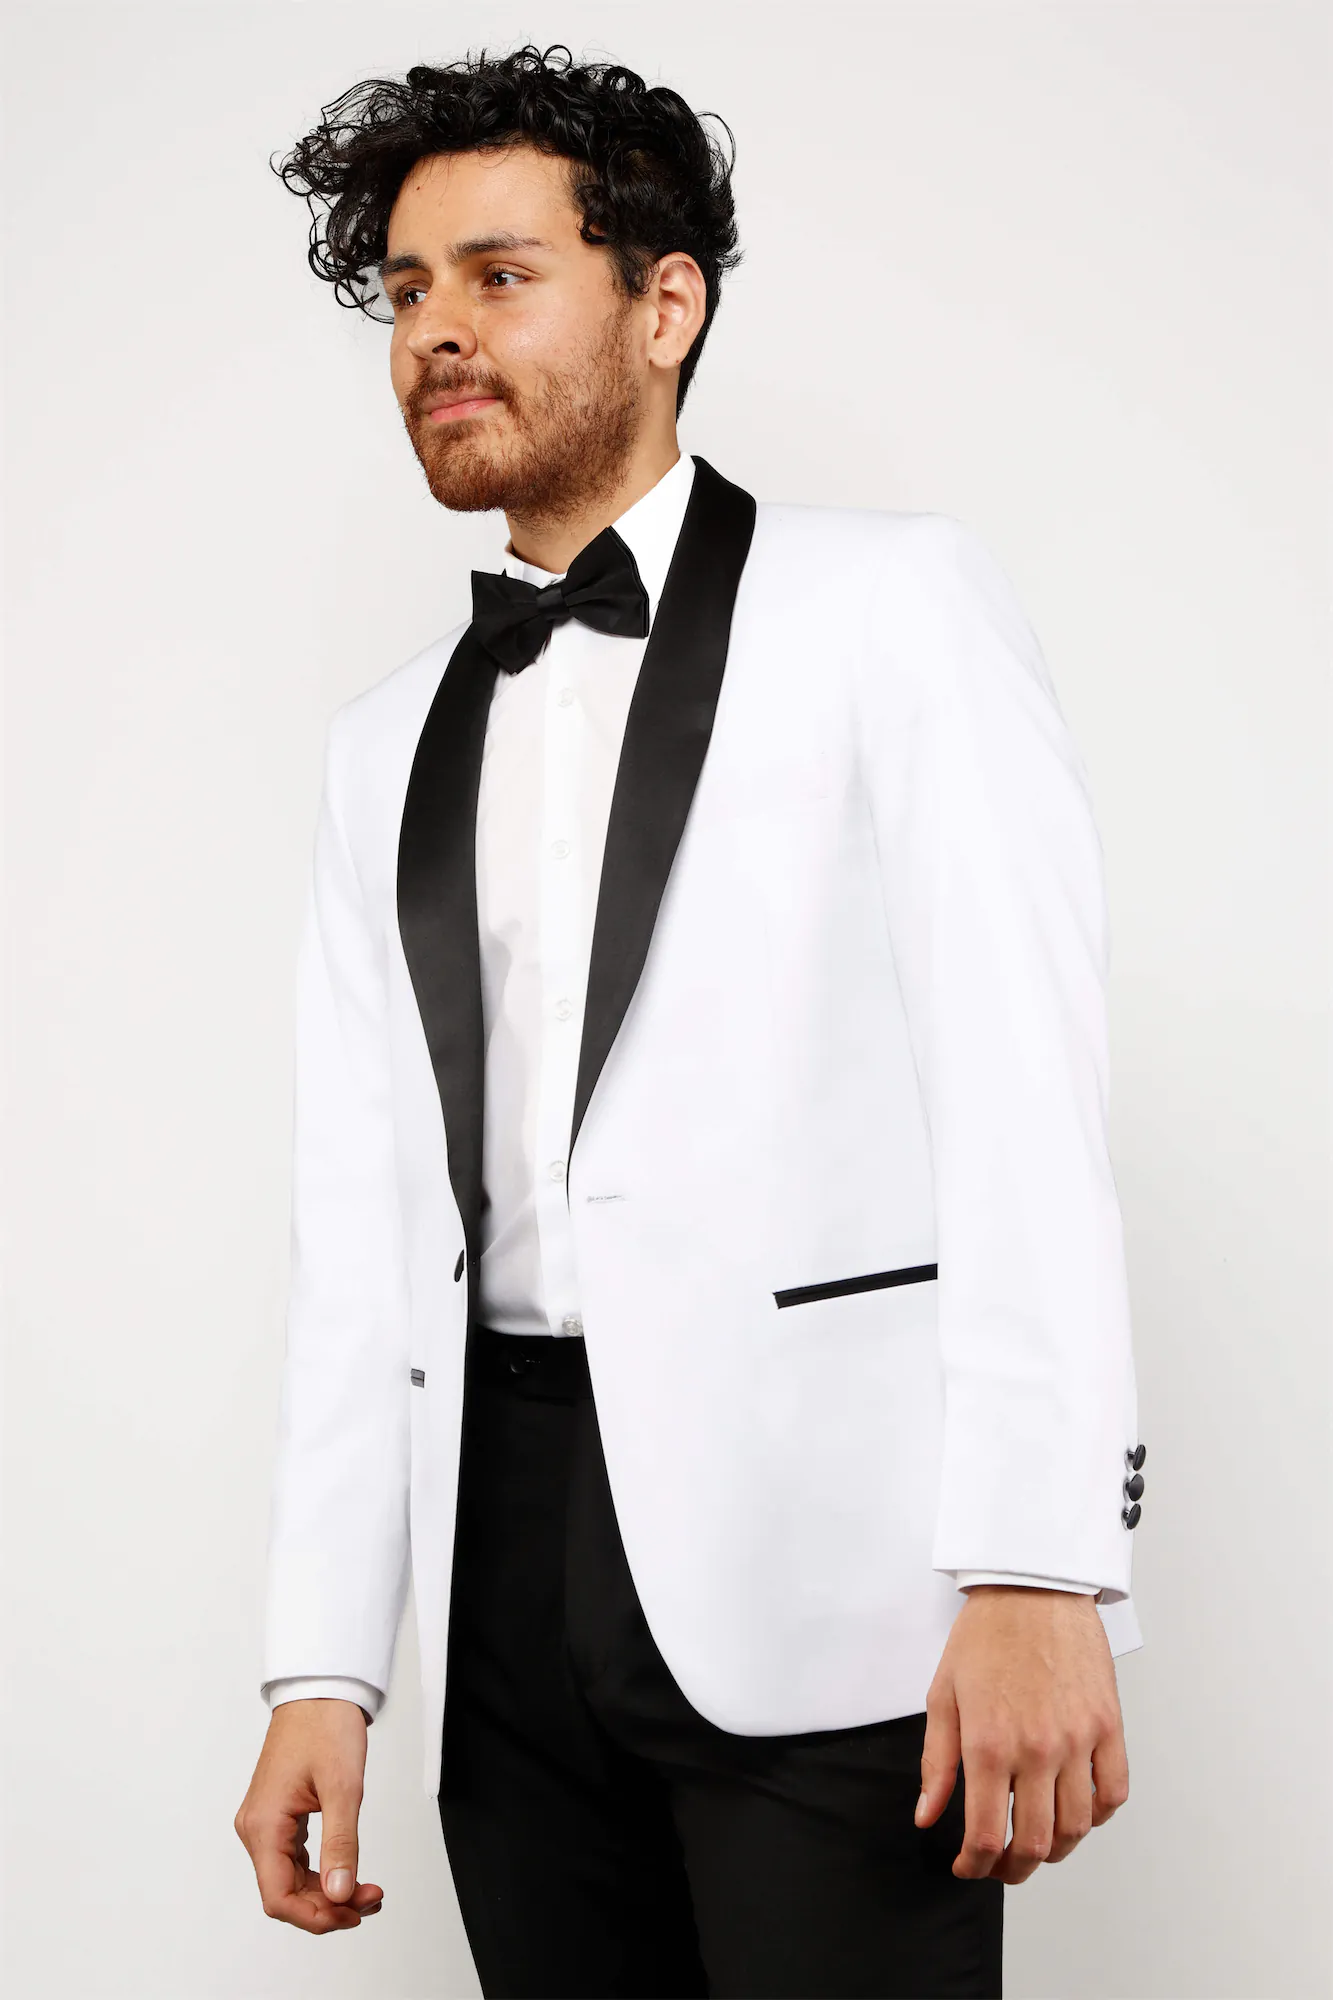 White Slim Fit 2-Piece Shawl Lapel Tuxedo Suit Jon_White_Showl